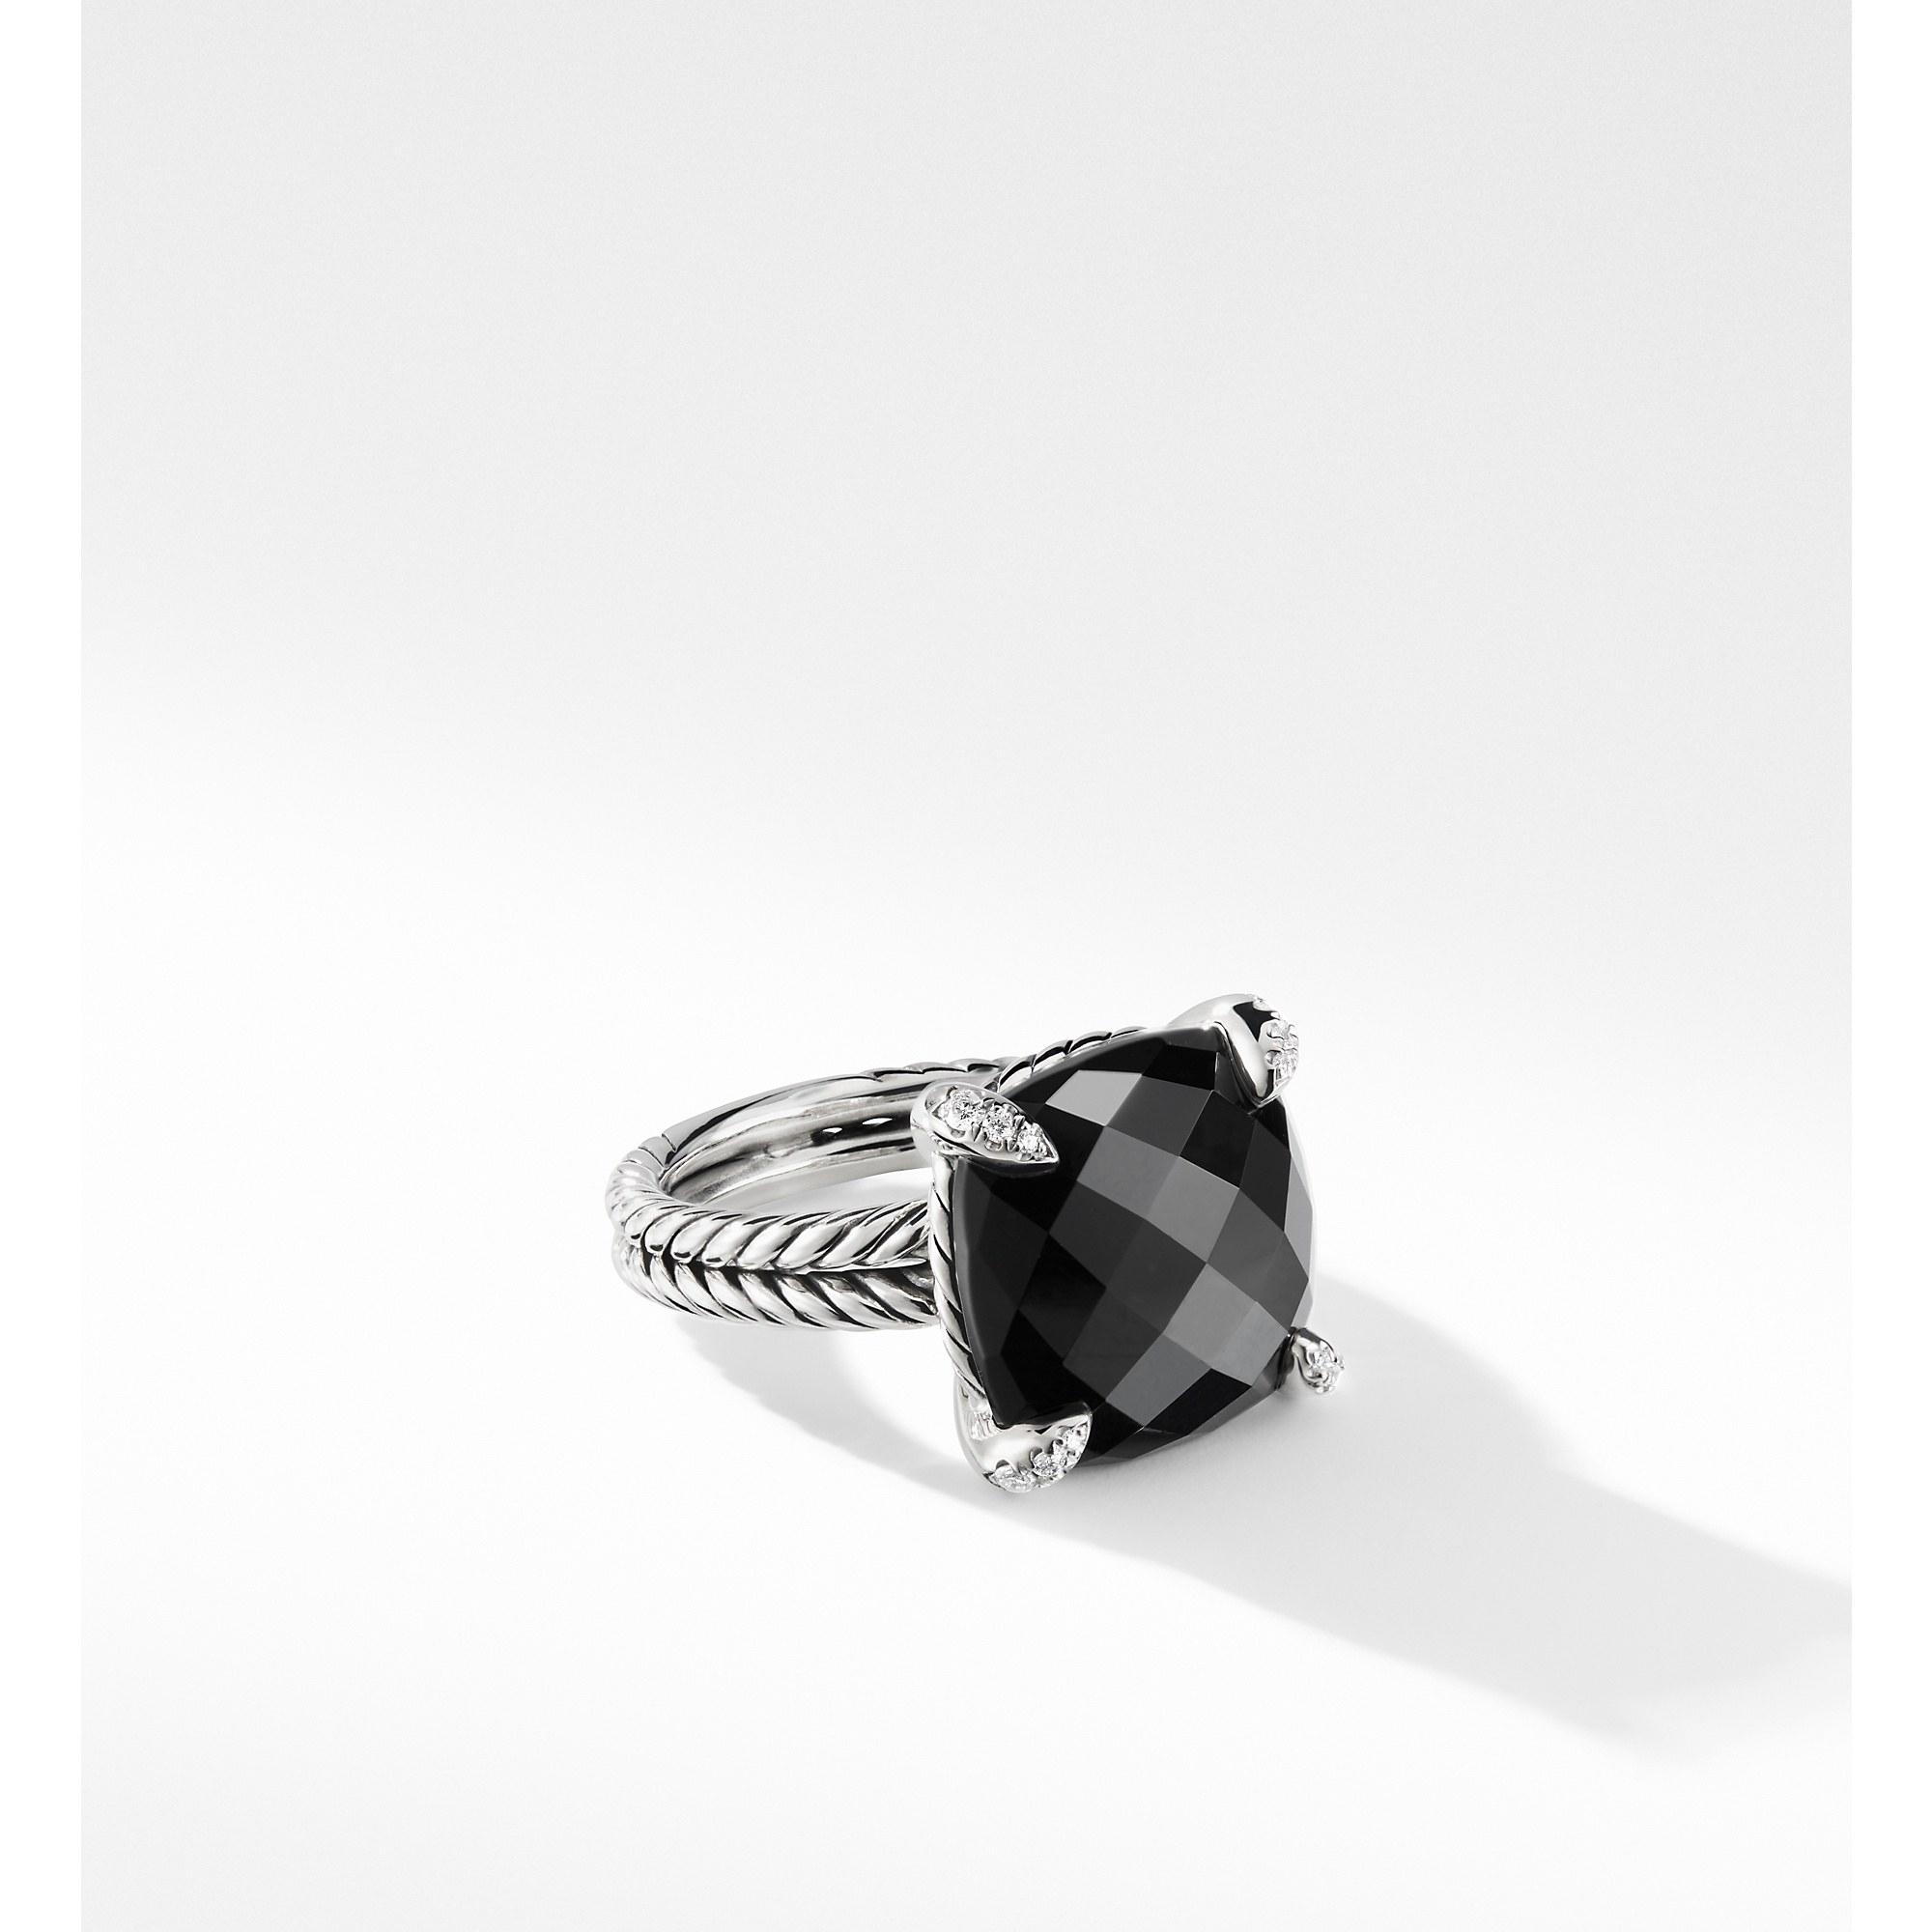 David Yurman Chatelaine Ring with Black Onyx and Pave Diamonds, size 6